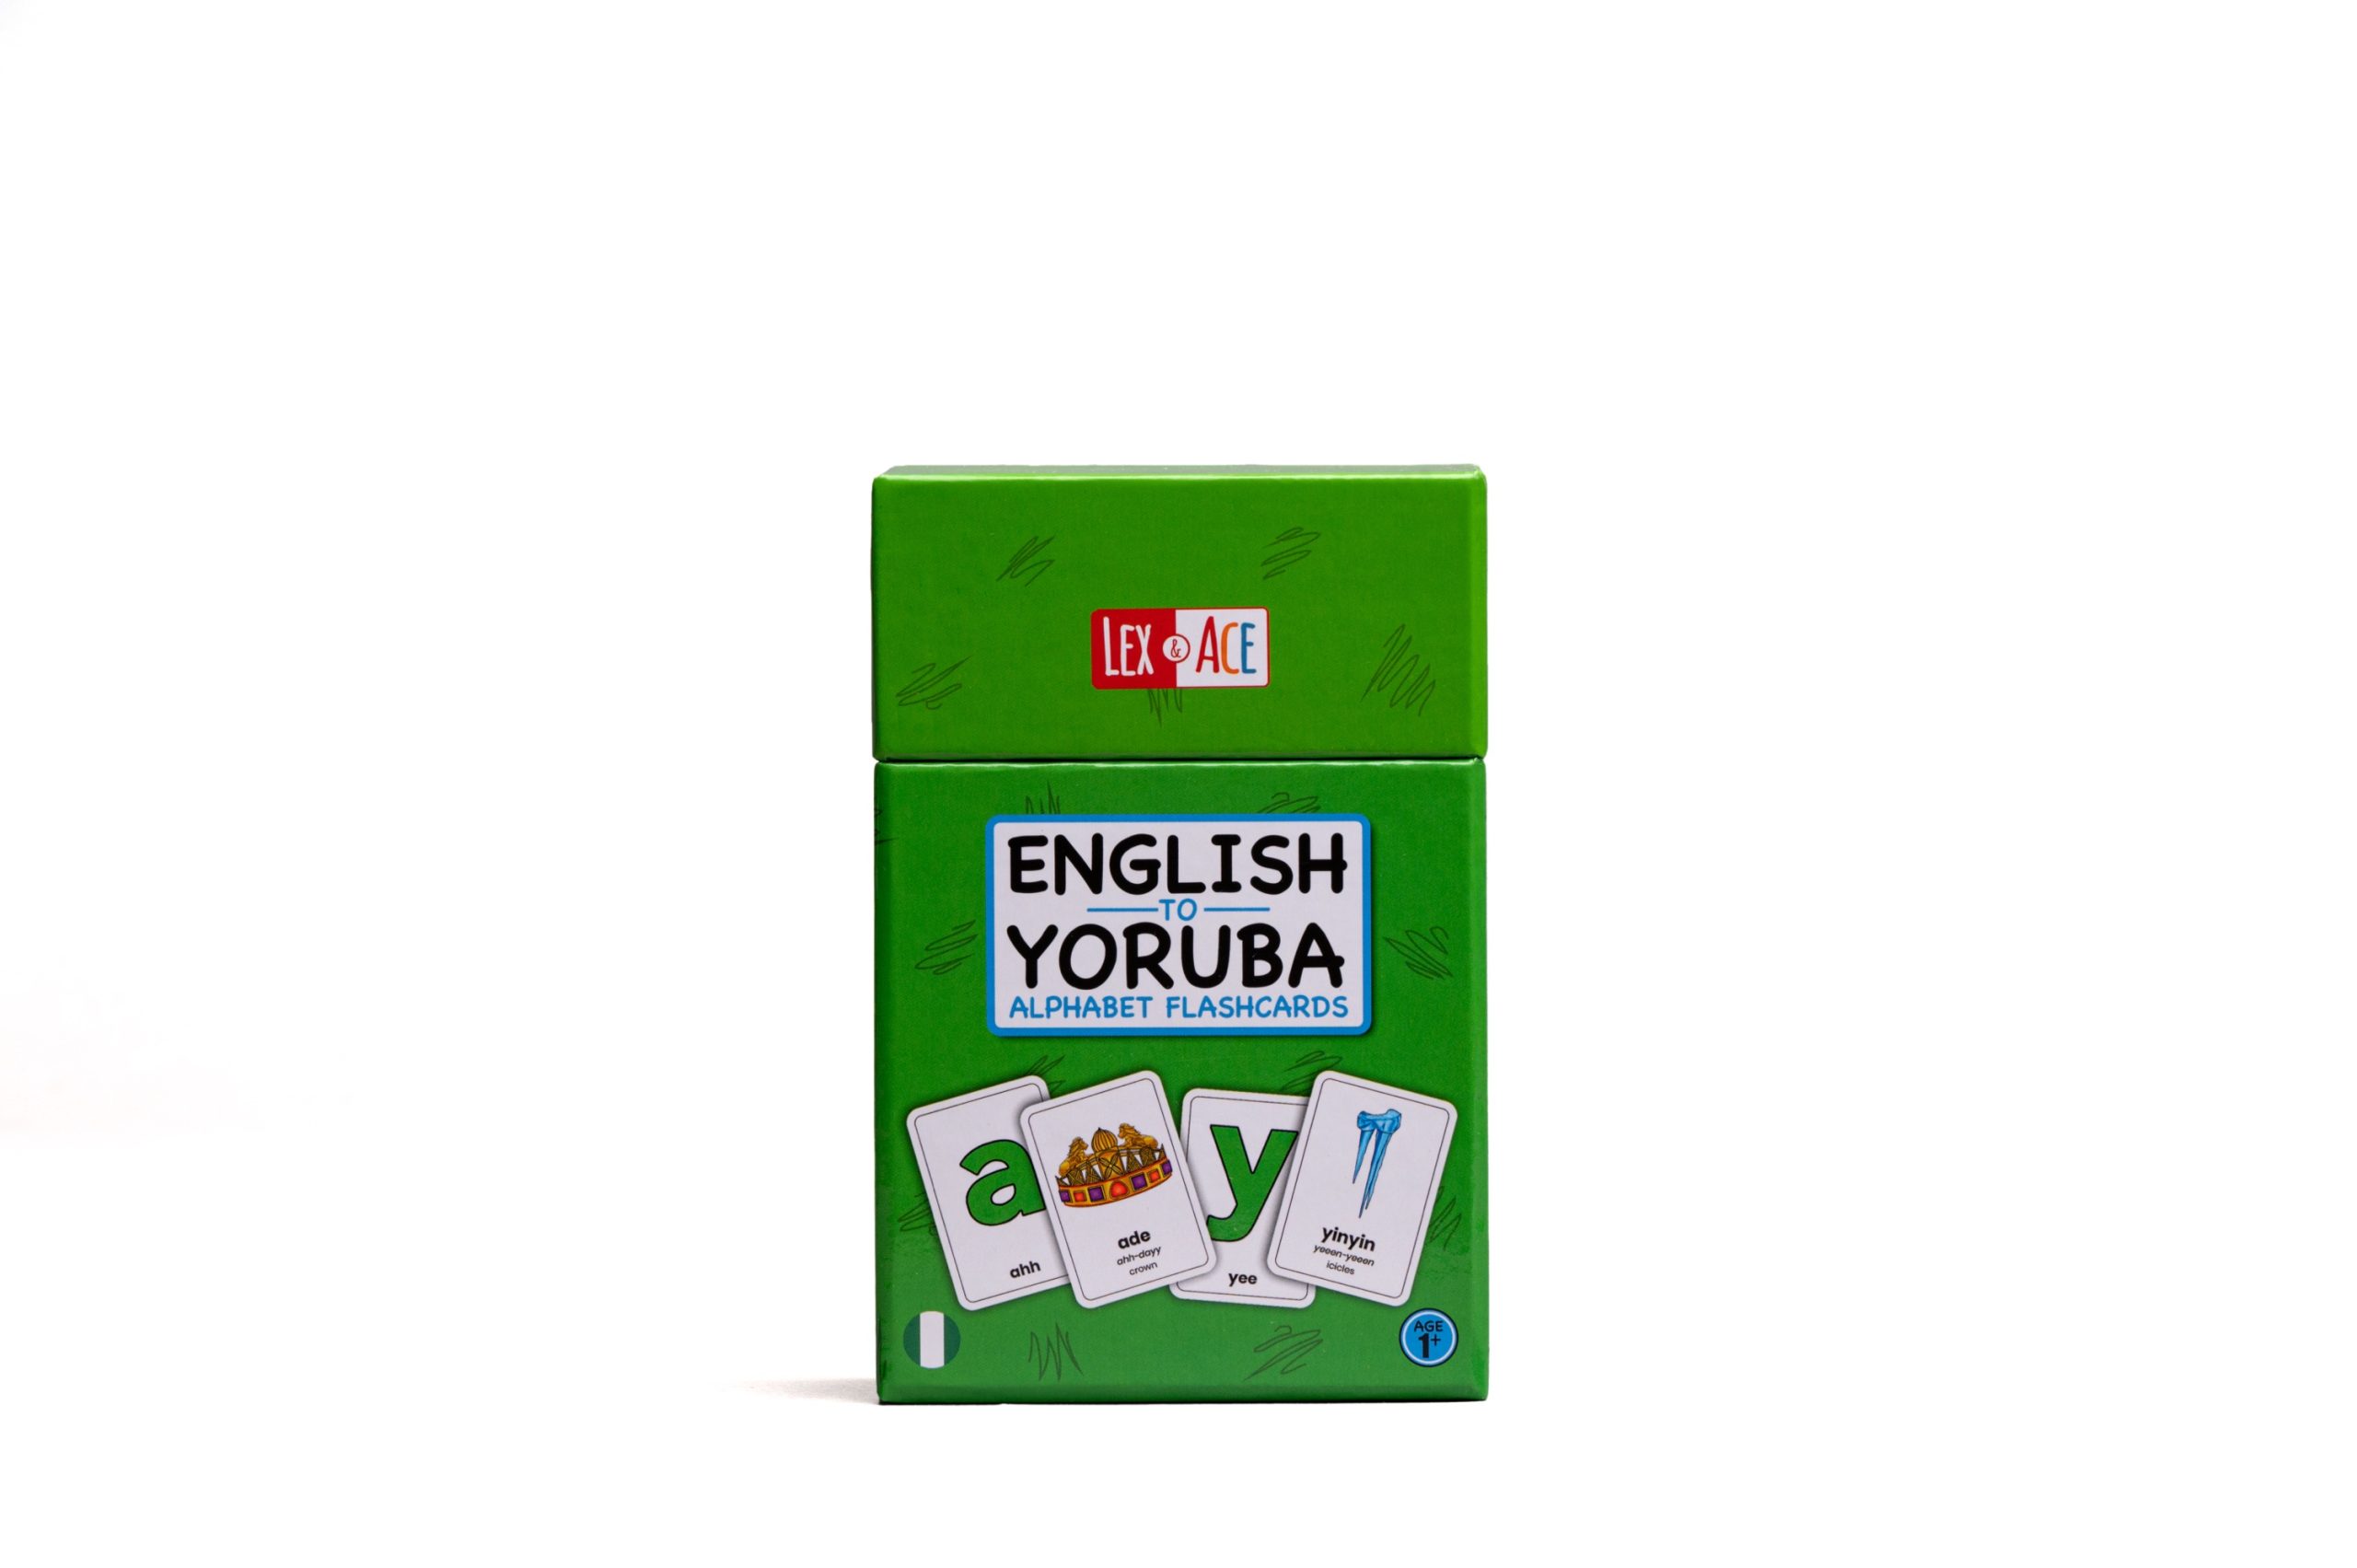 English to Yoruba Alphabet Flashcards